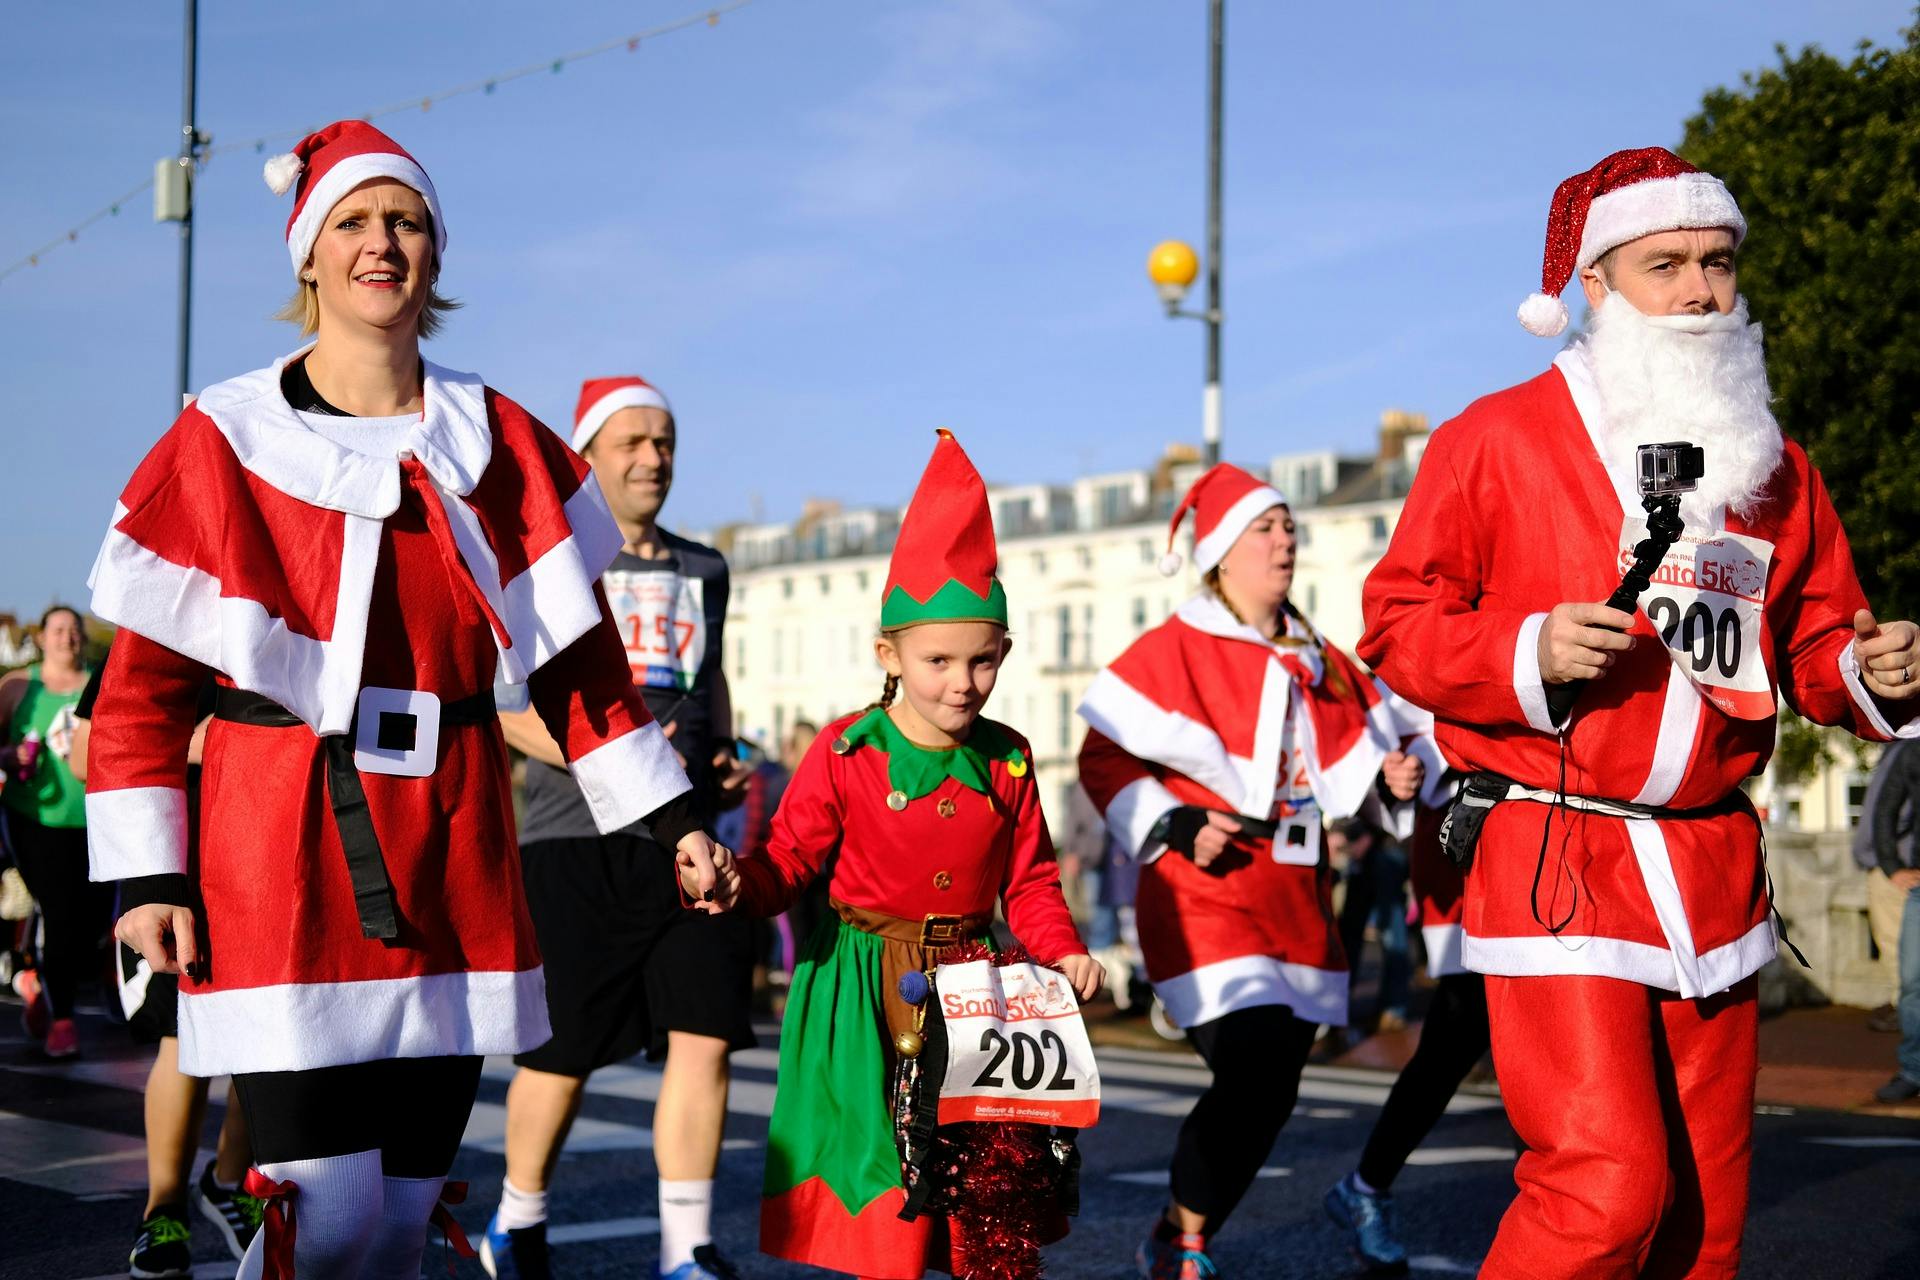 festive-christmas-running-races